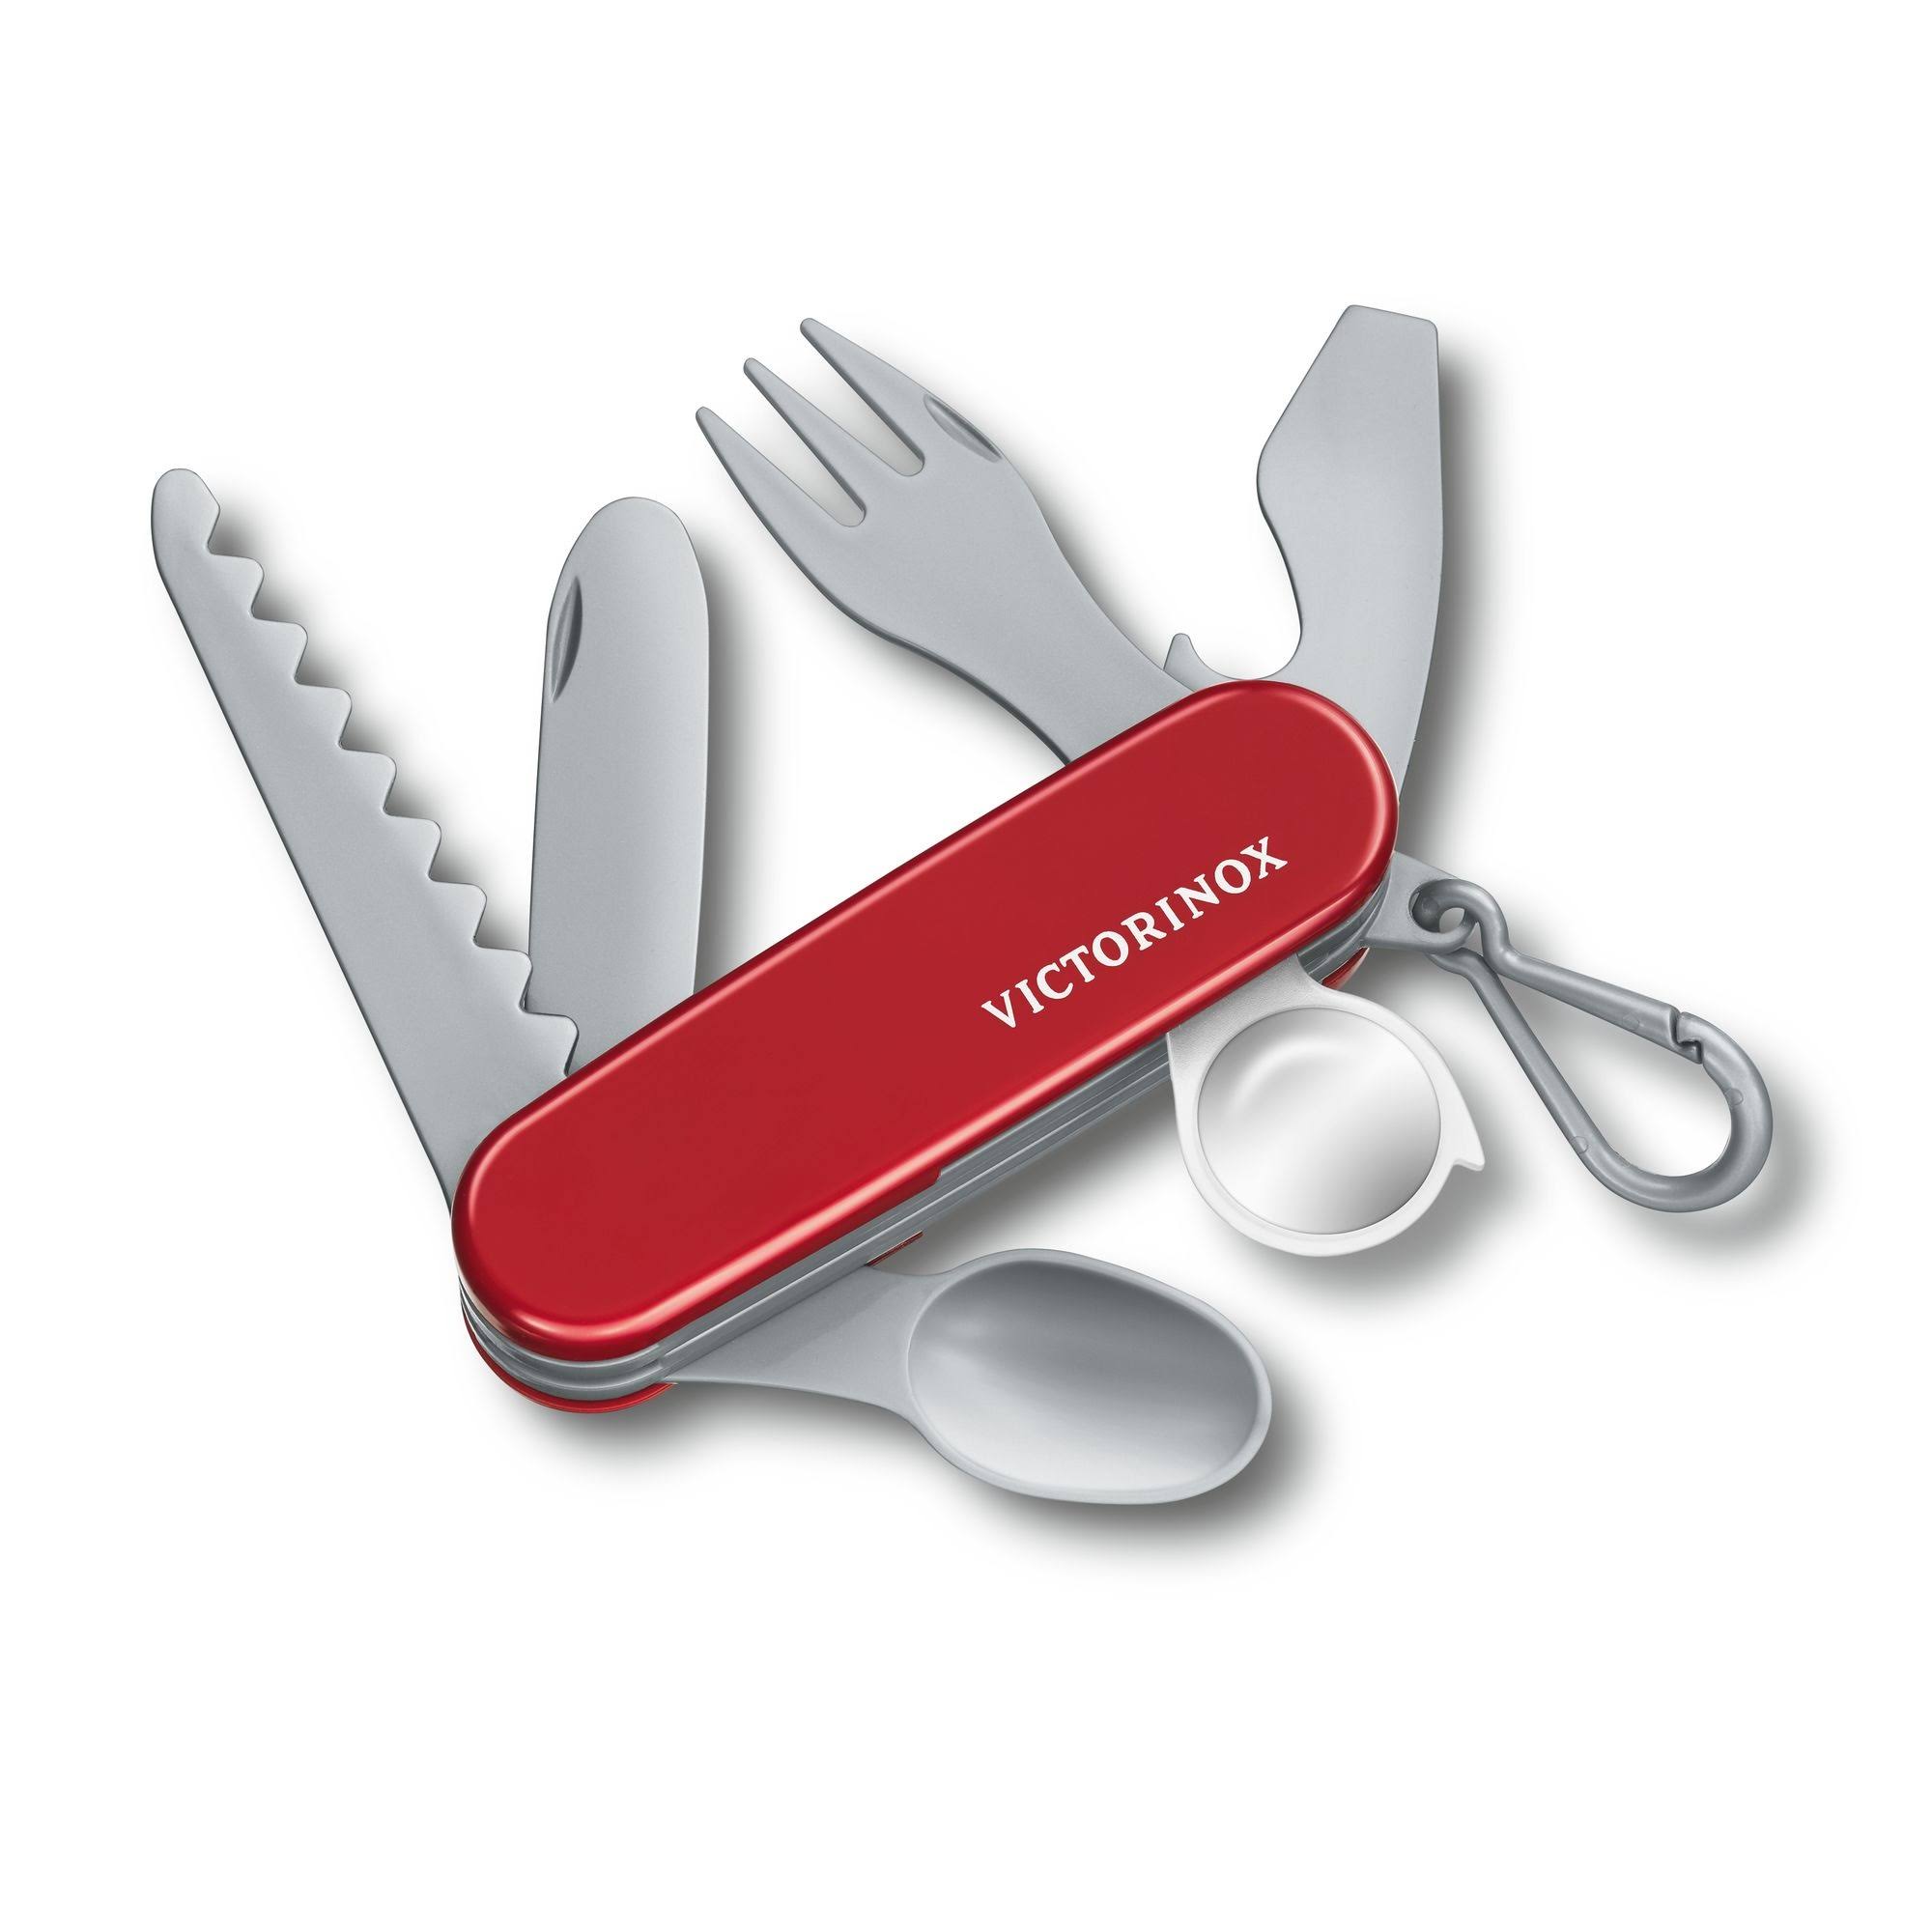 Victorinox 2805 Swiss Army All Plastic Toy Multi Tool Folding Pocket Knife - Red